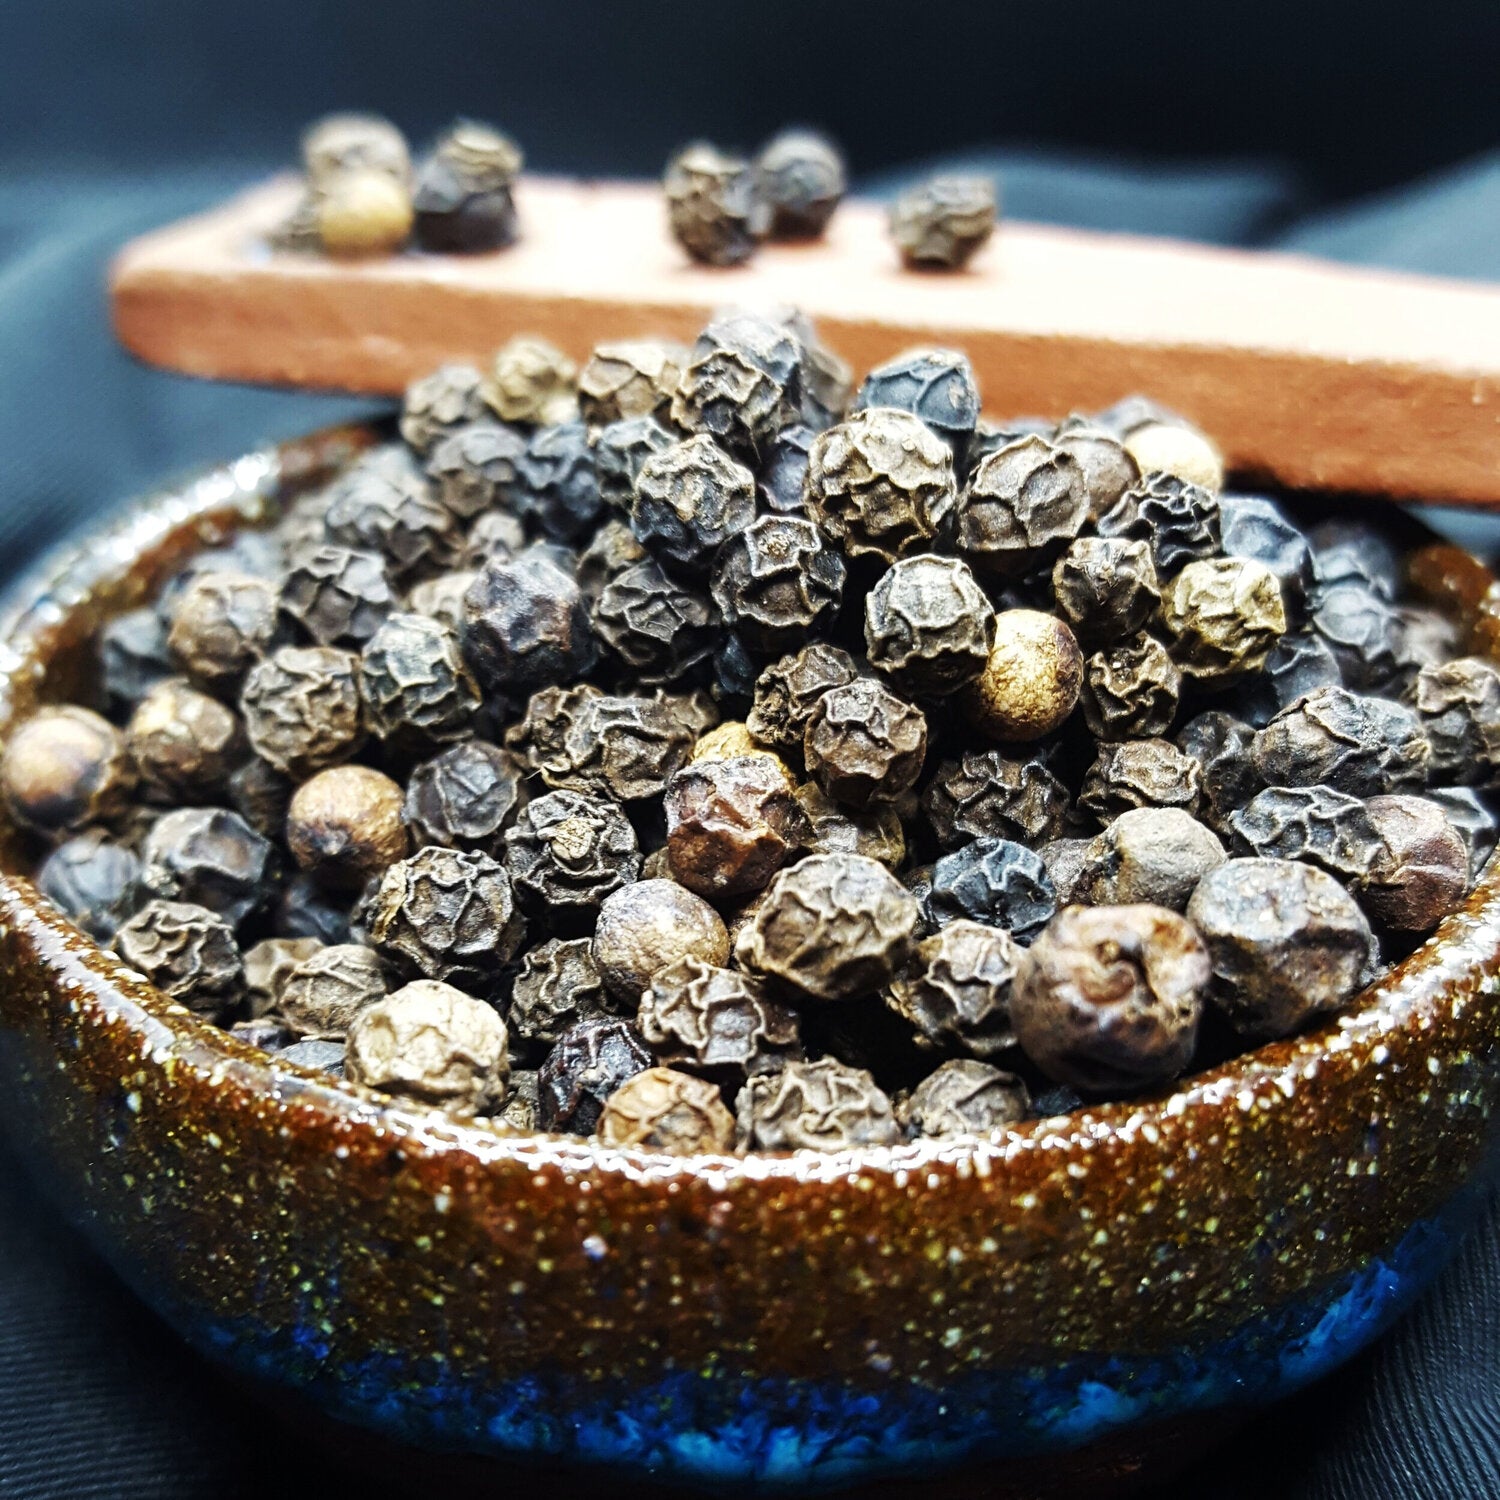 Alchemy Taste Organic Black Gold Peppercorn (1lb) - Lifestyle Markets